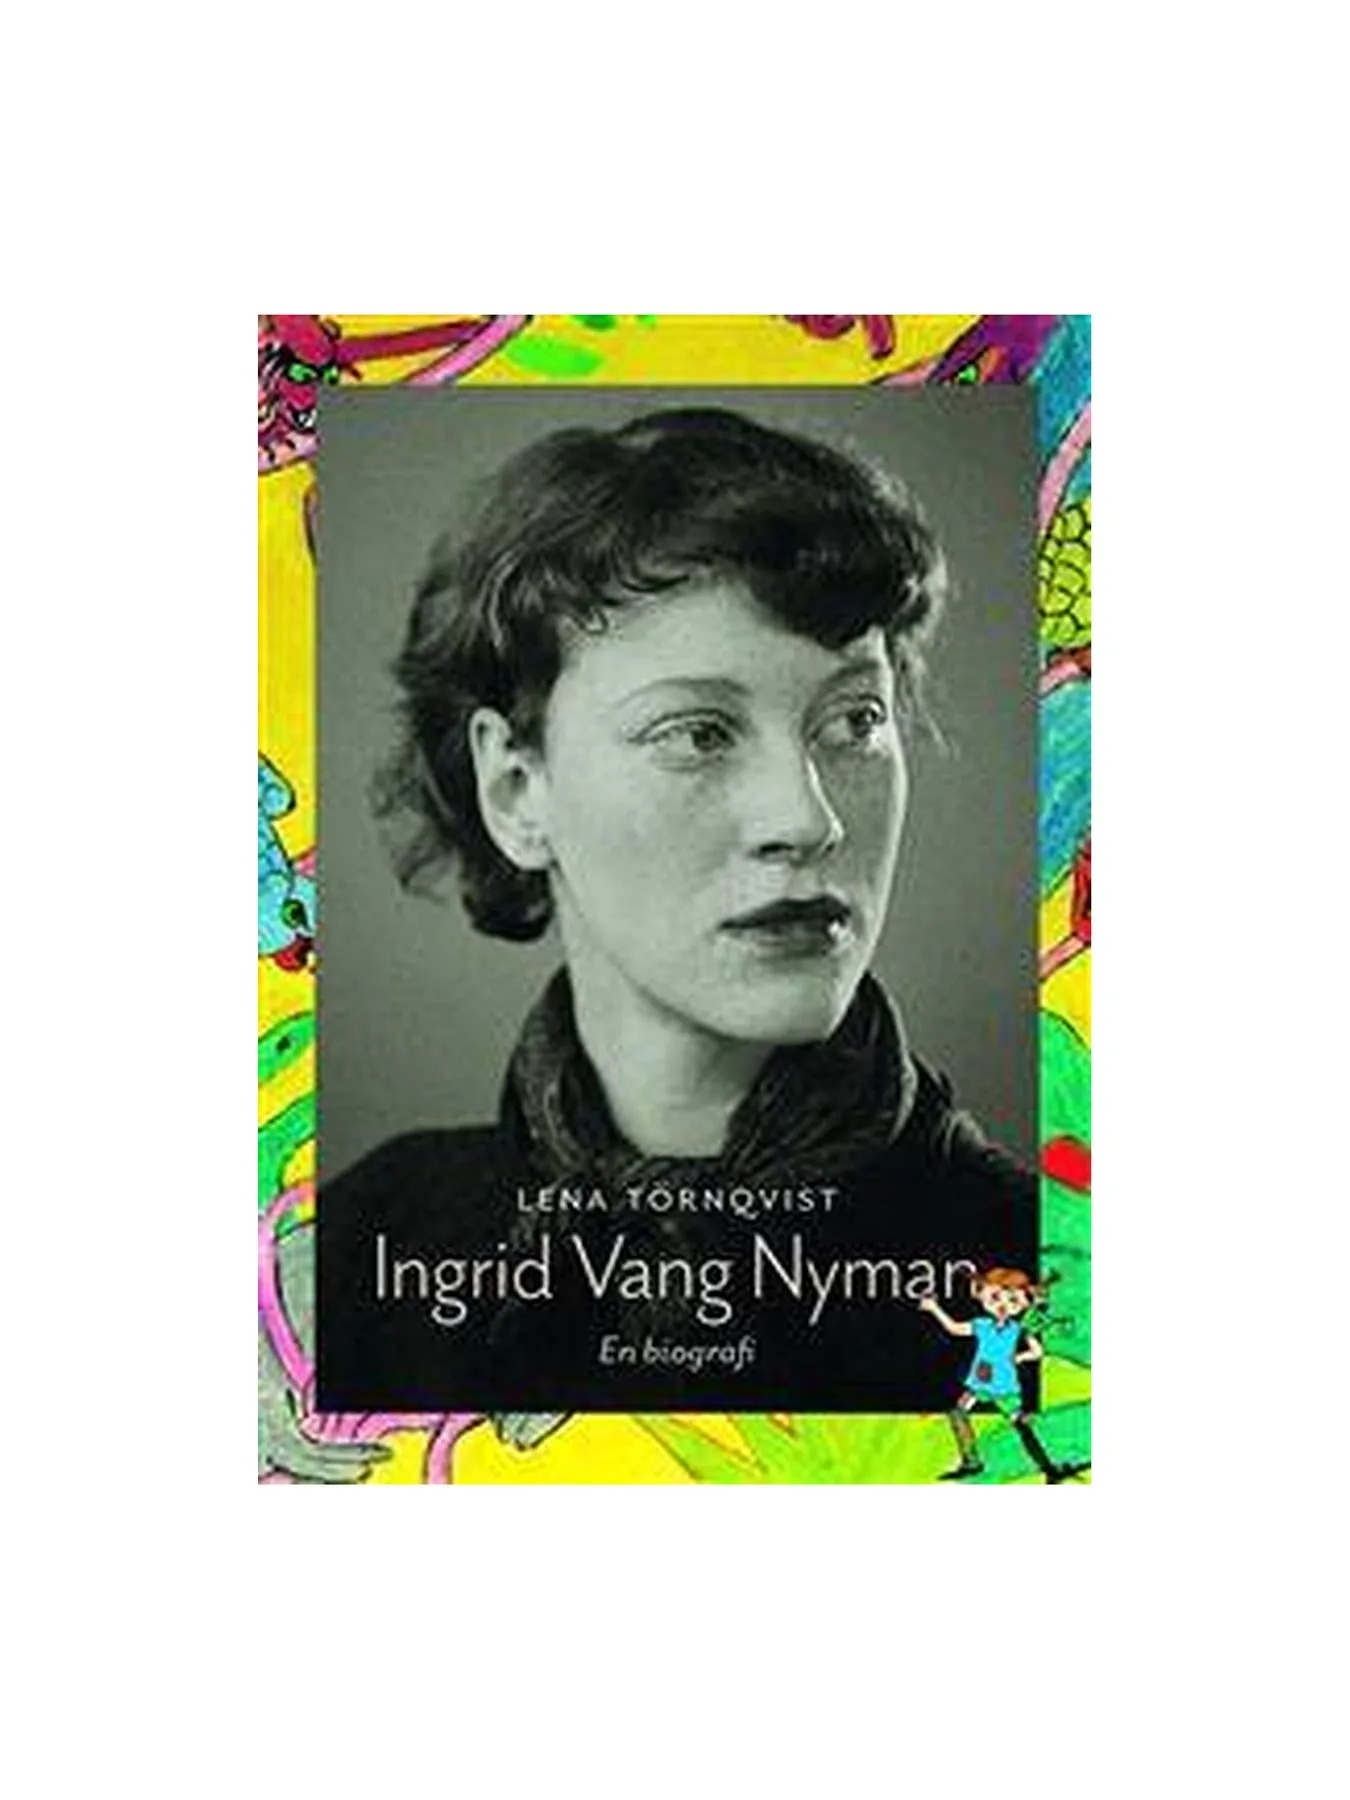 Book by Ingrid Vang Nyman A Biography